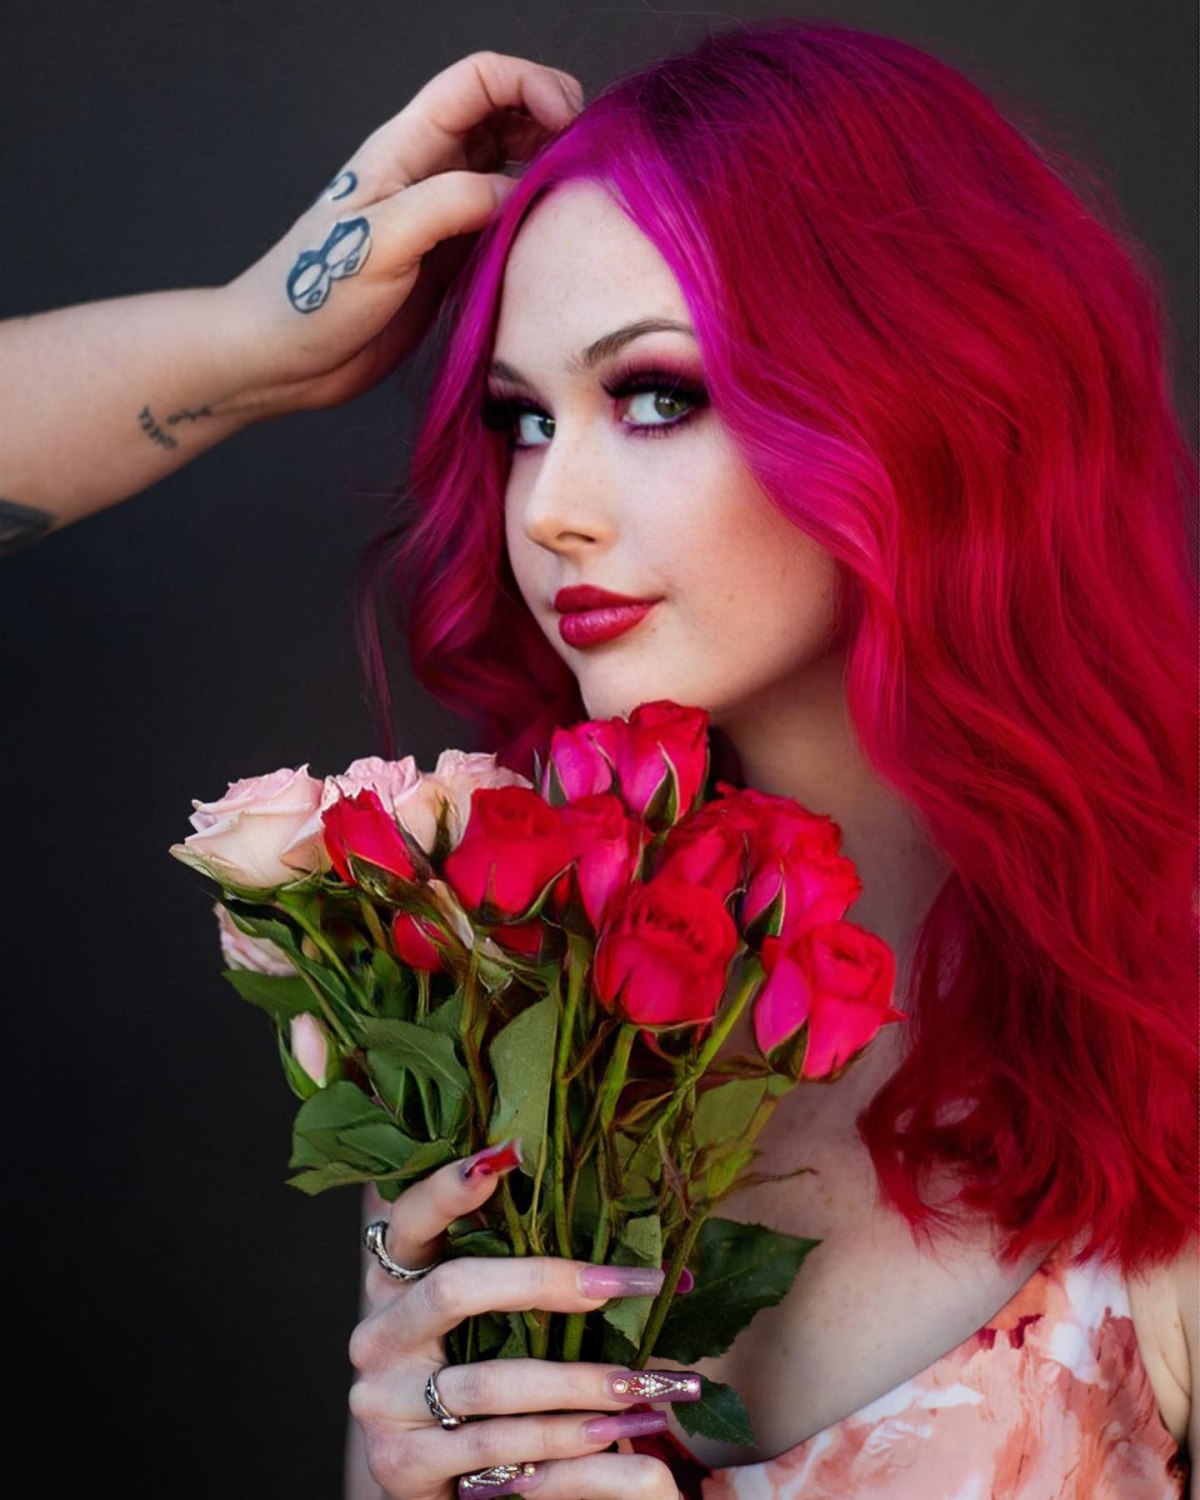 face framing pink hair and red hair